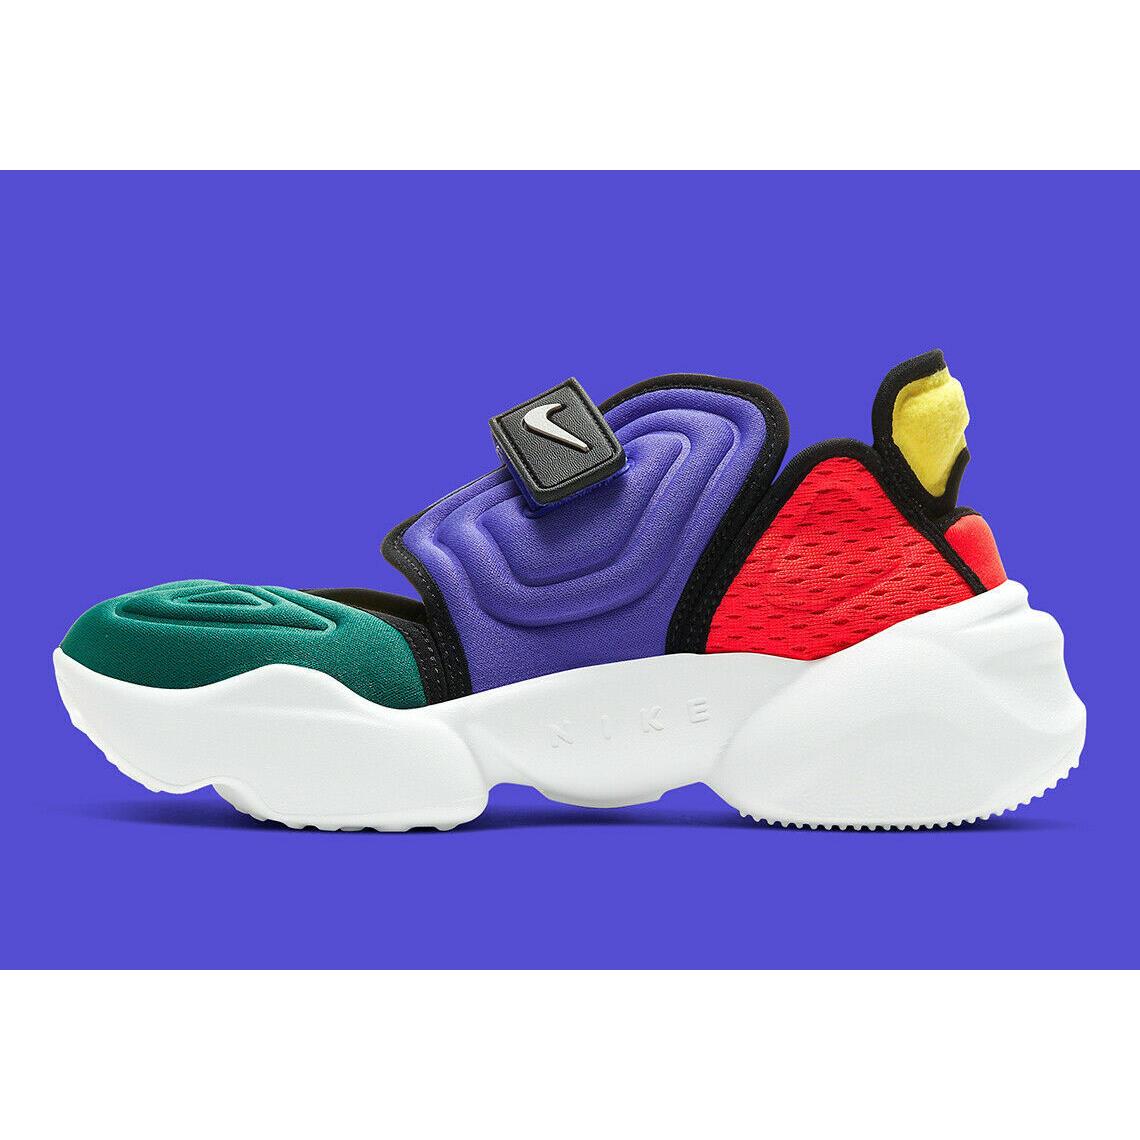 Nike shoes Aqua Rift - Multicolor 0